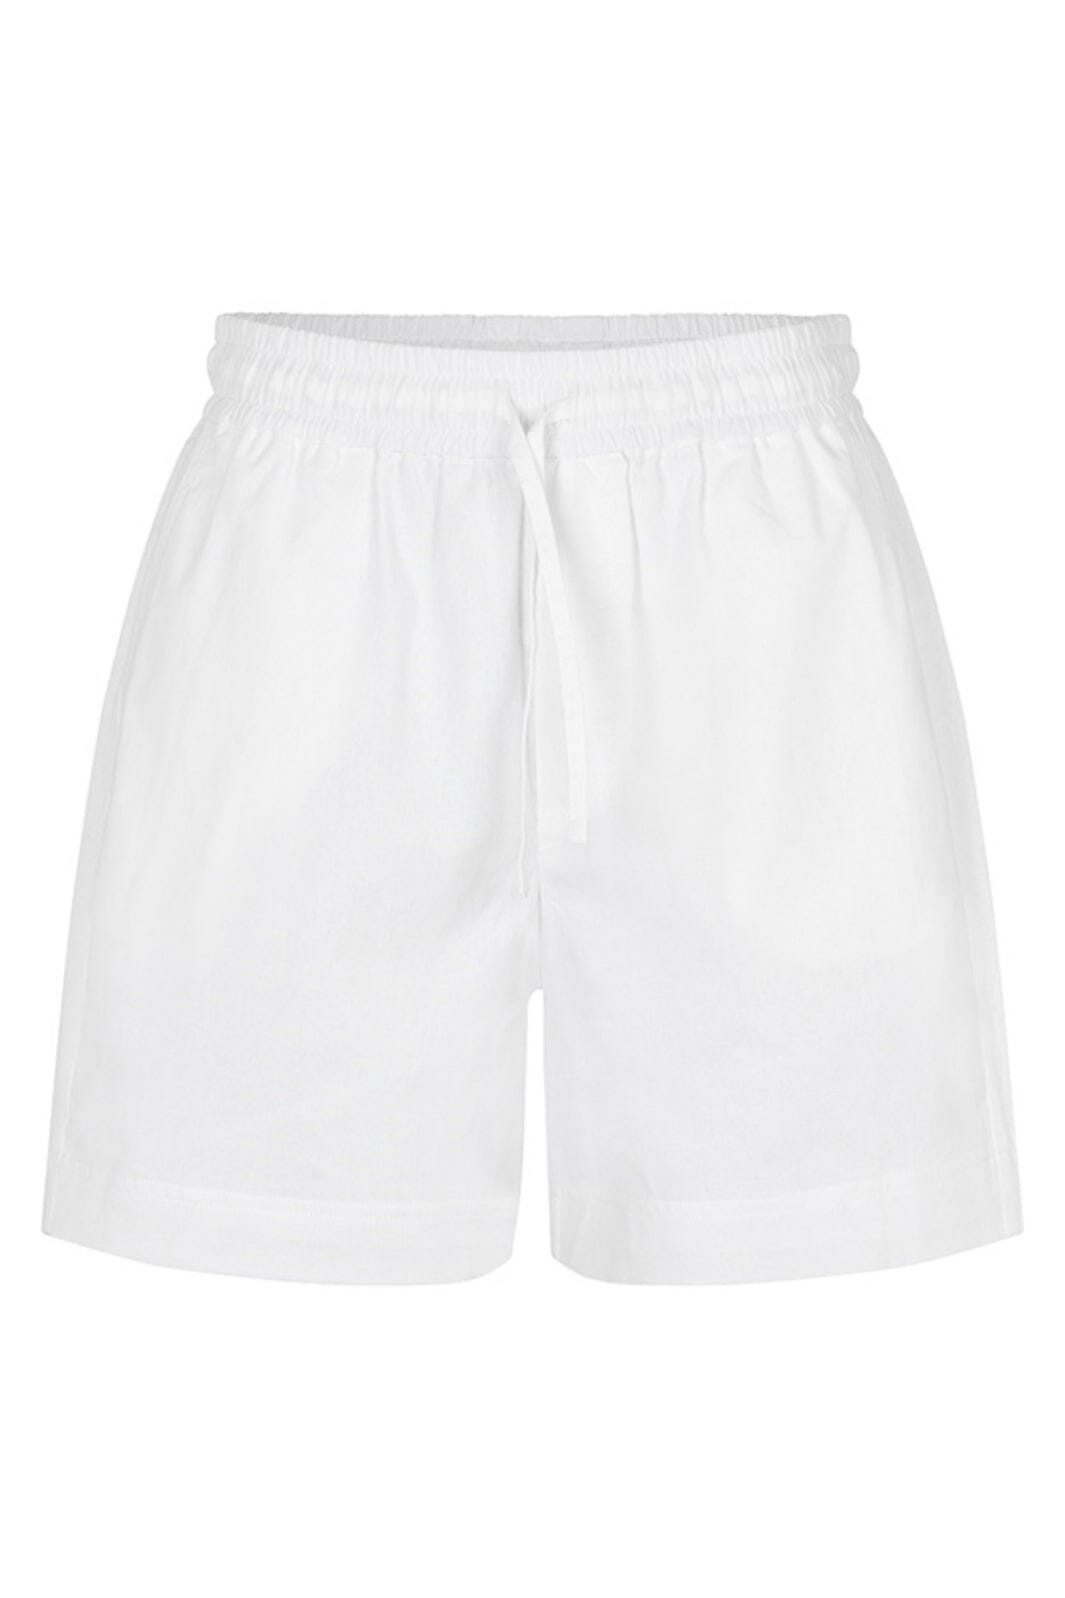 MbyM - Fidelina-M - White Shorts 